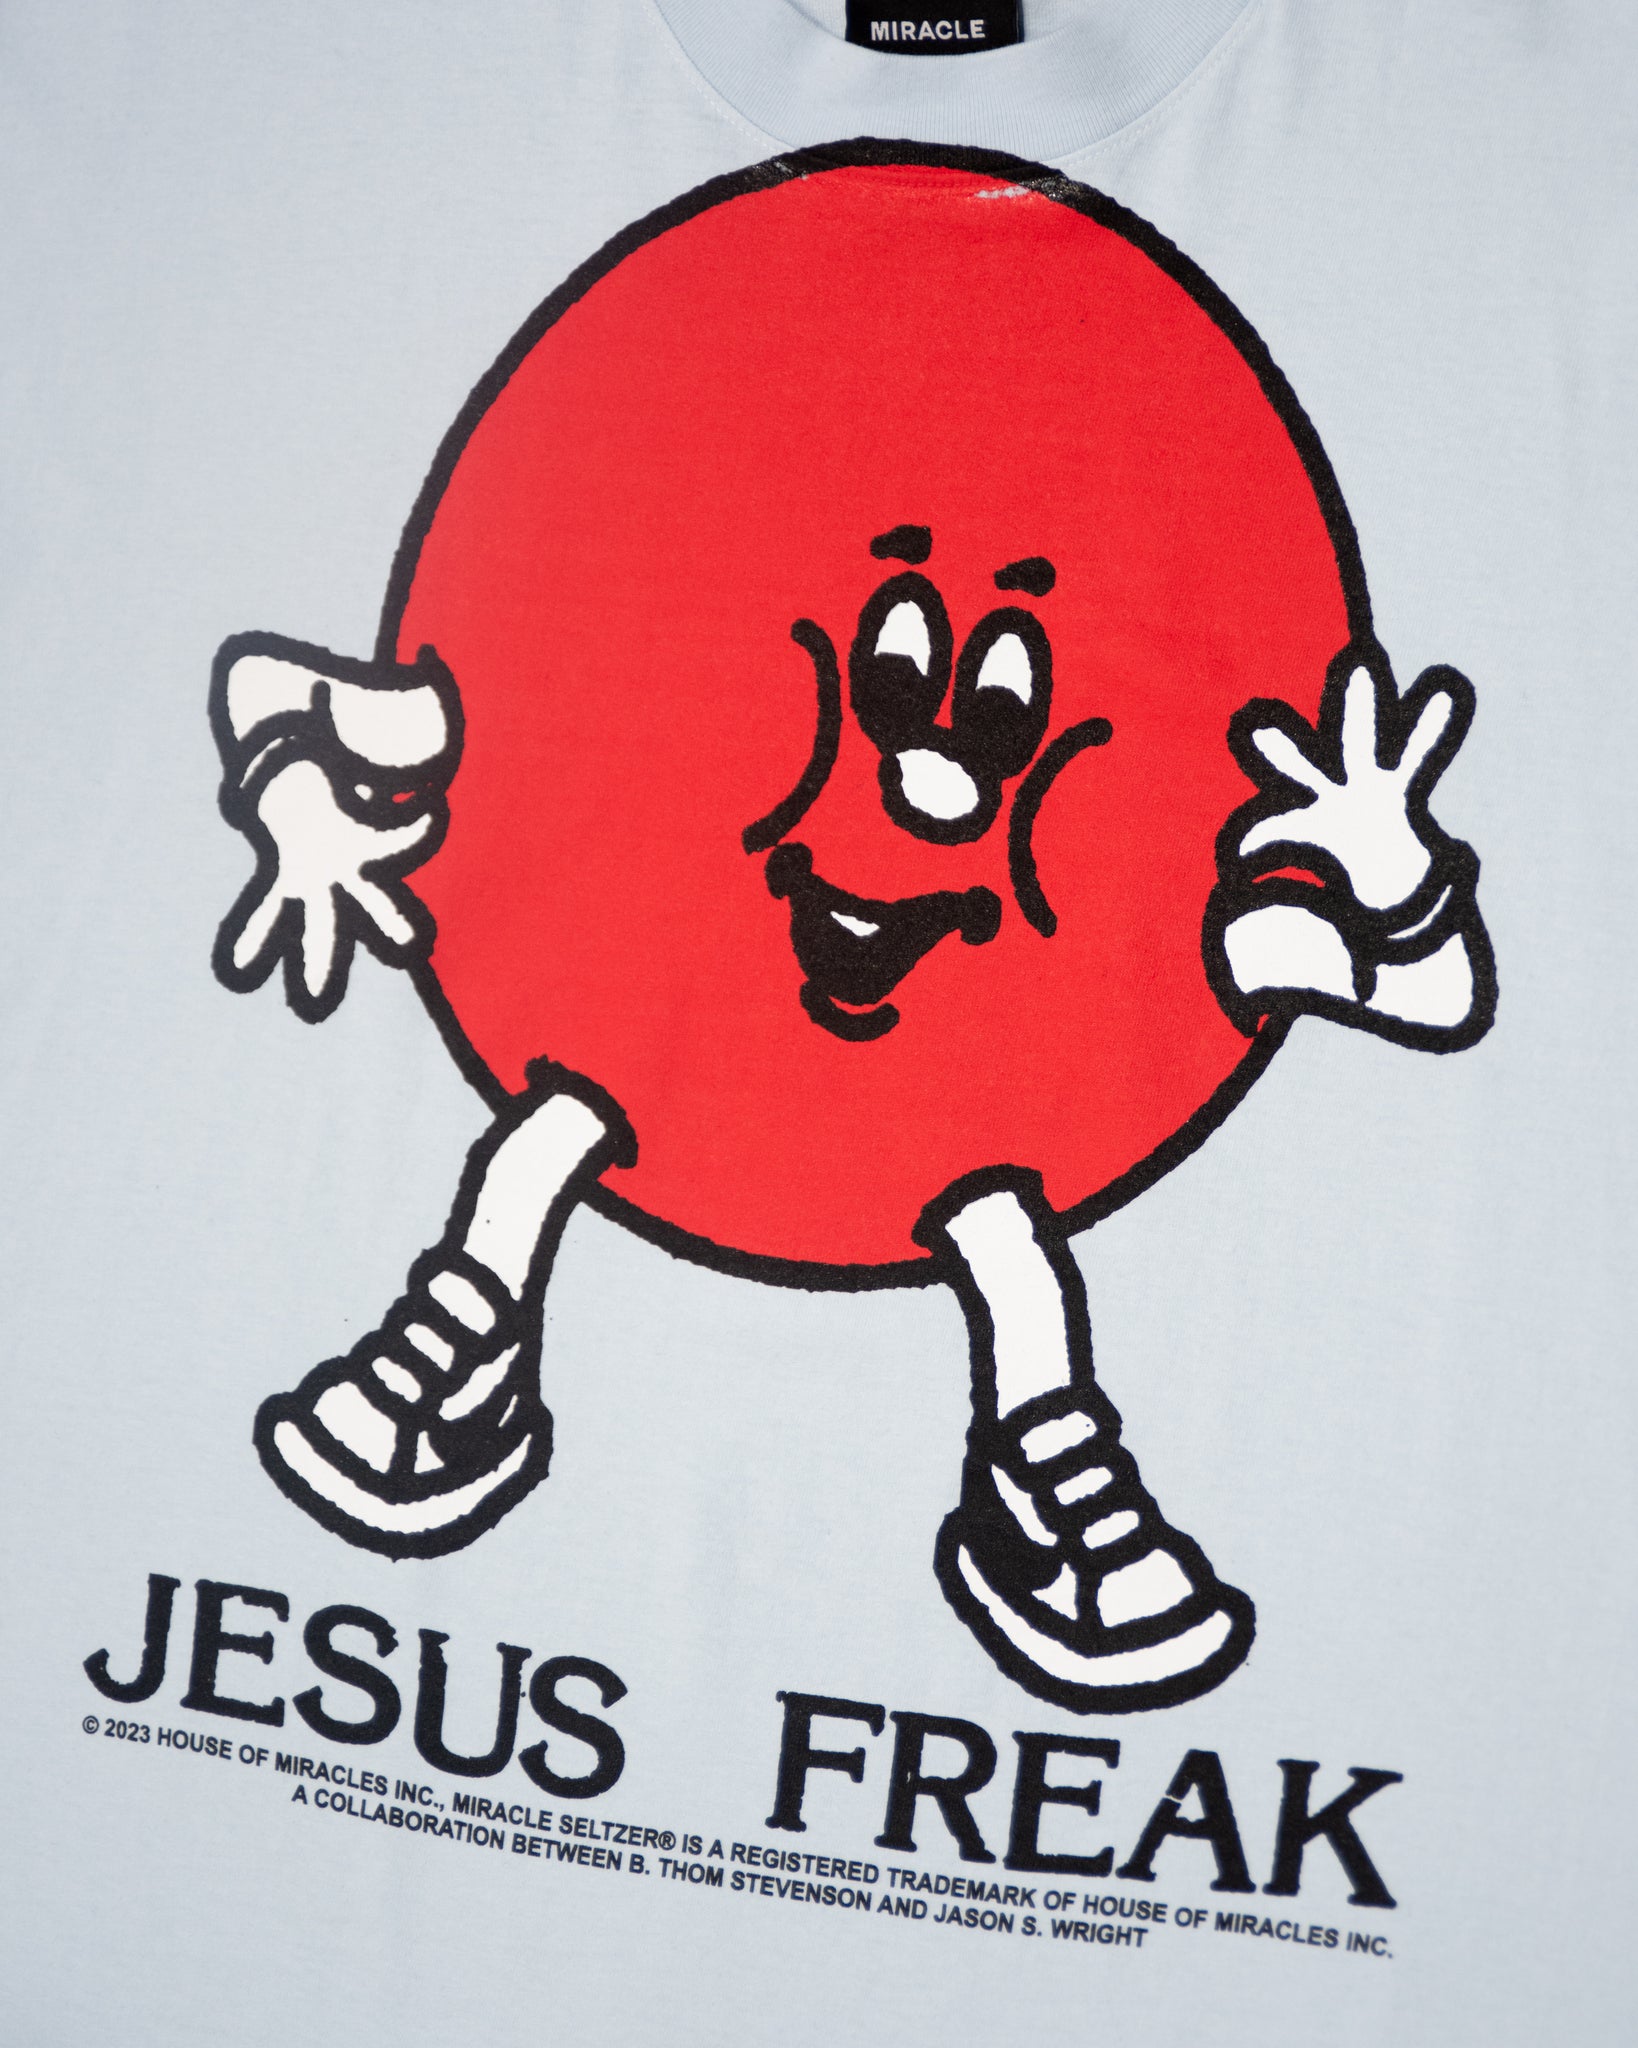 Jesus Freak T-Shirt